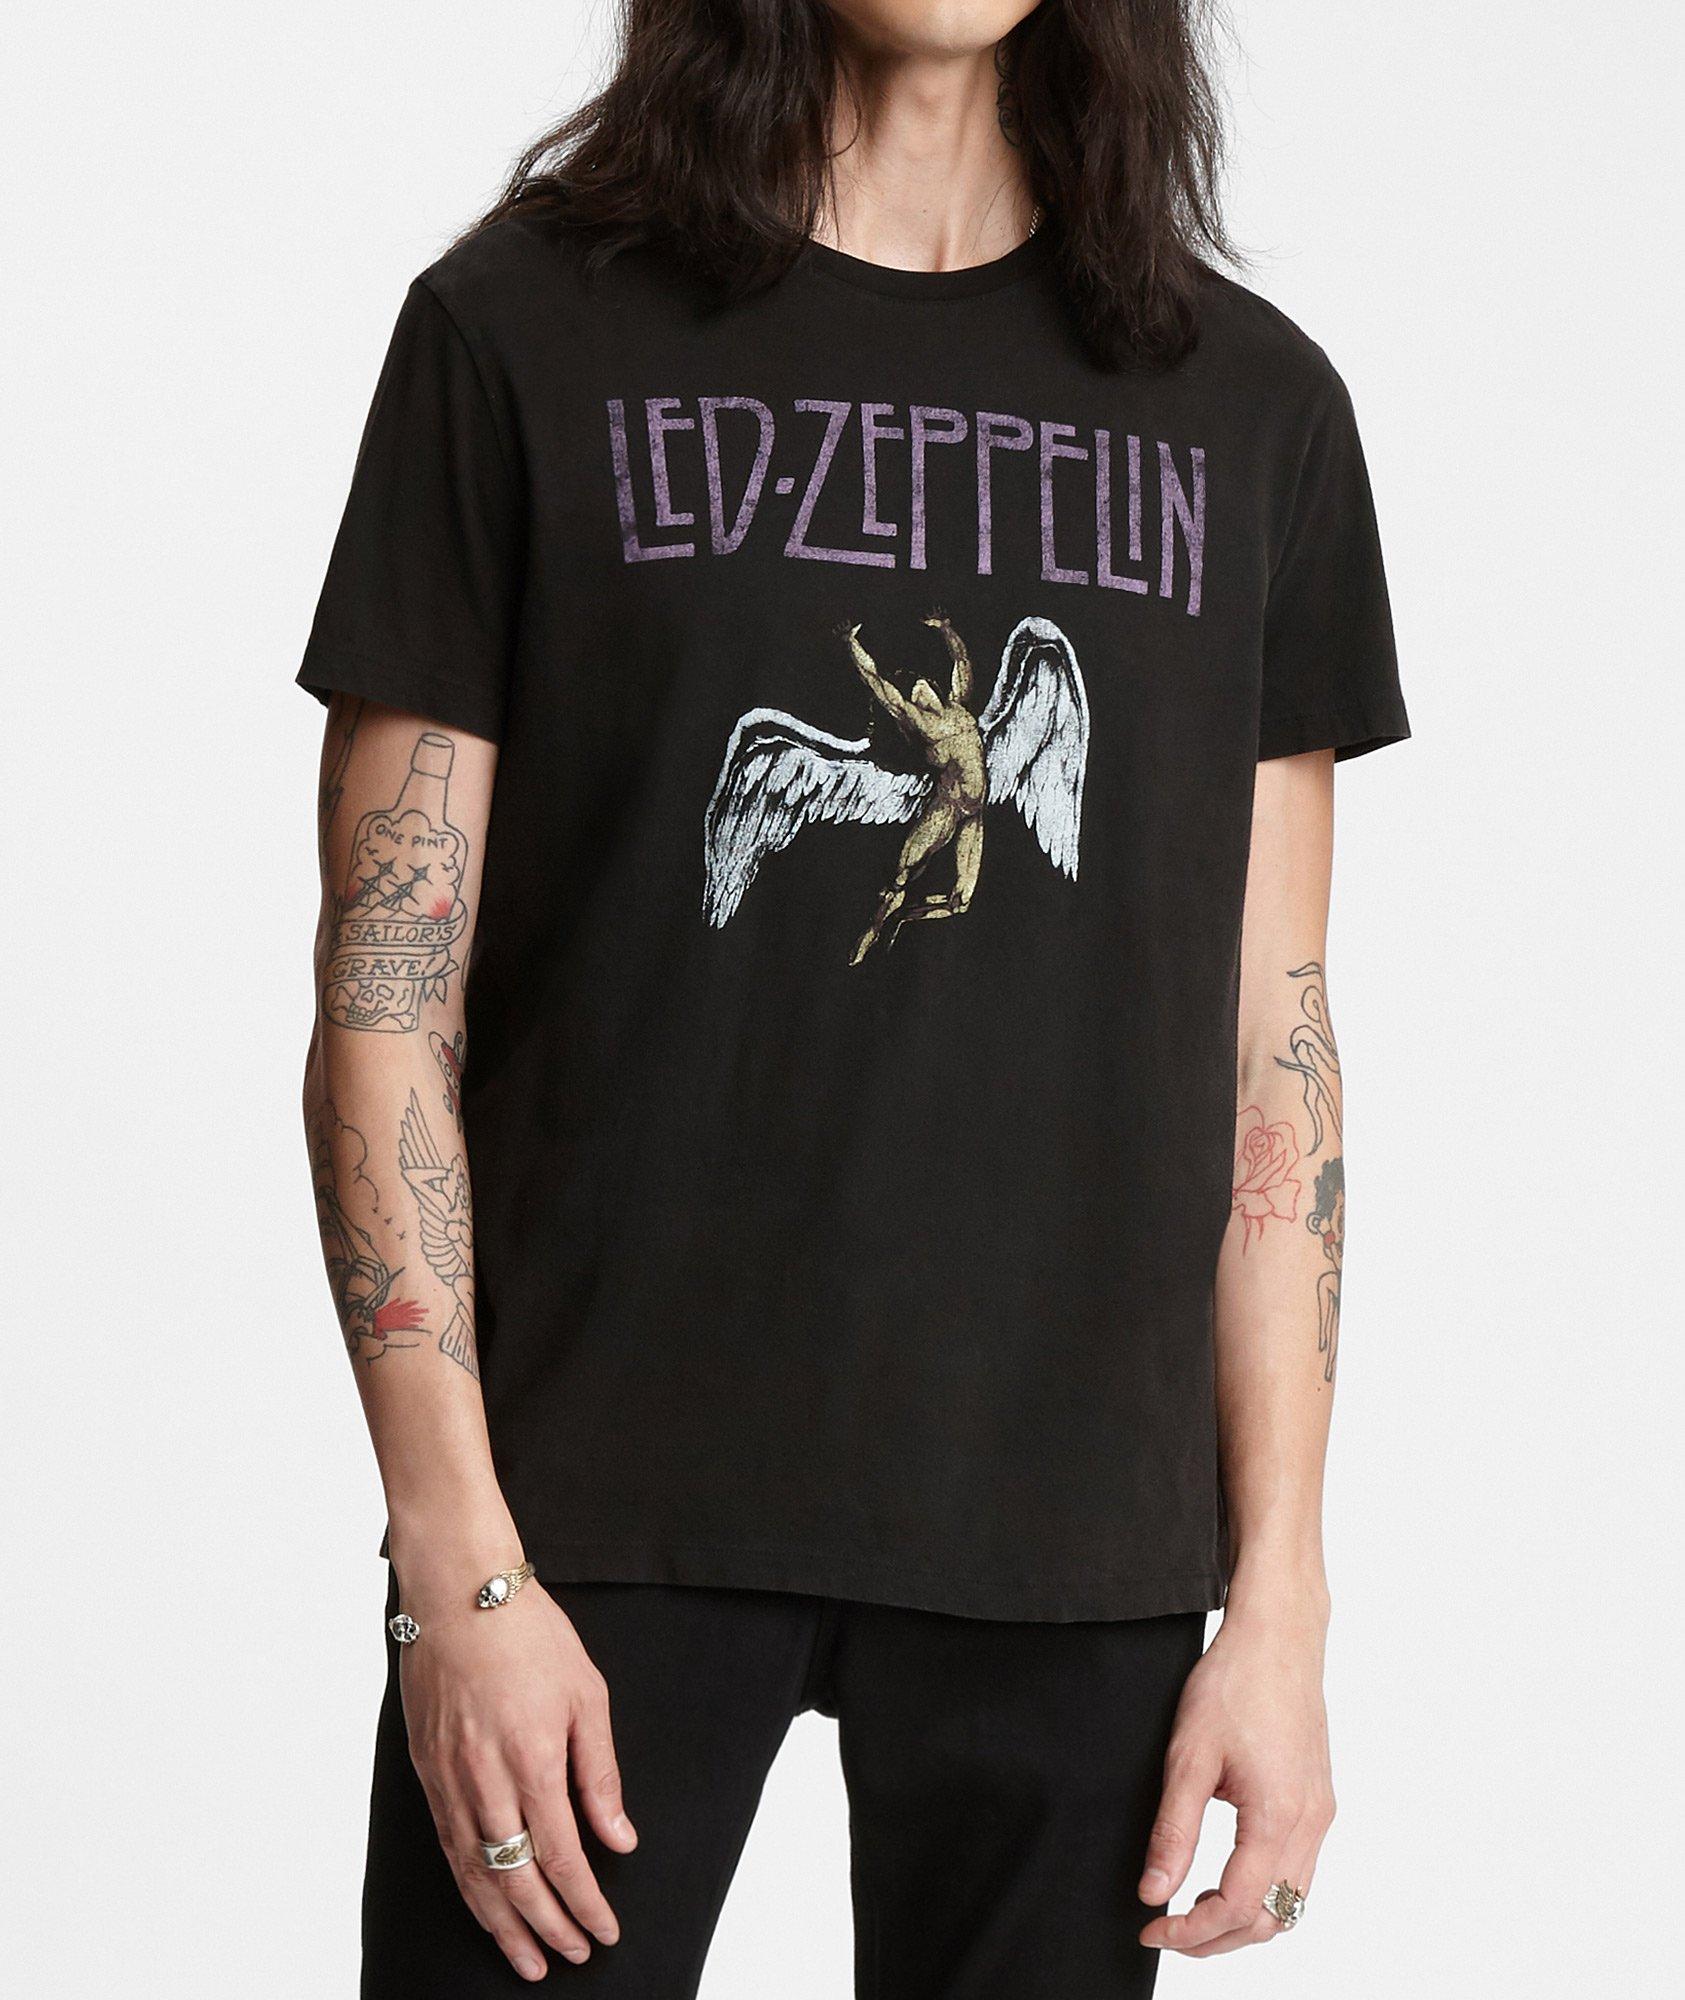 Led Zeppelin Swan Song T-Shirt image 0